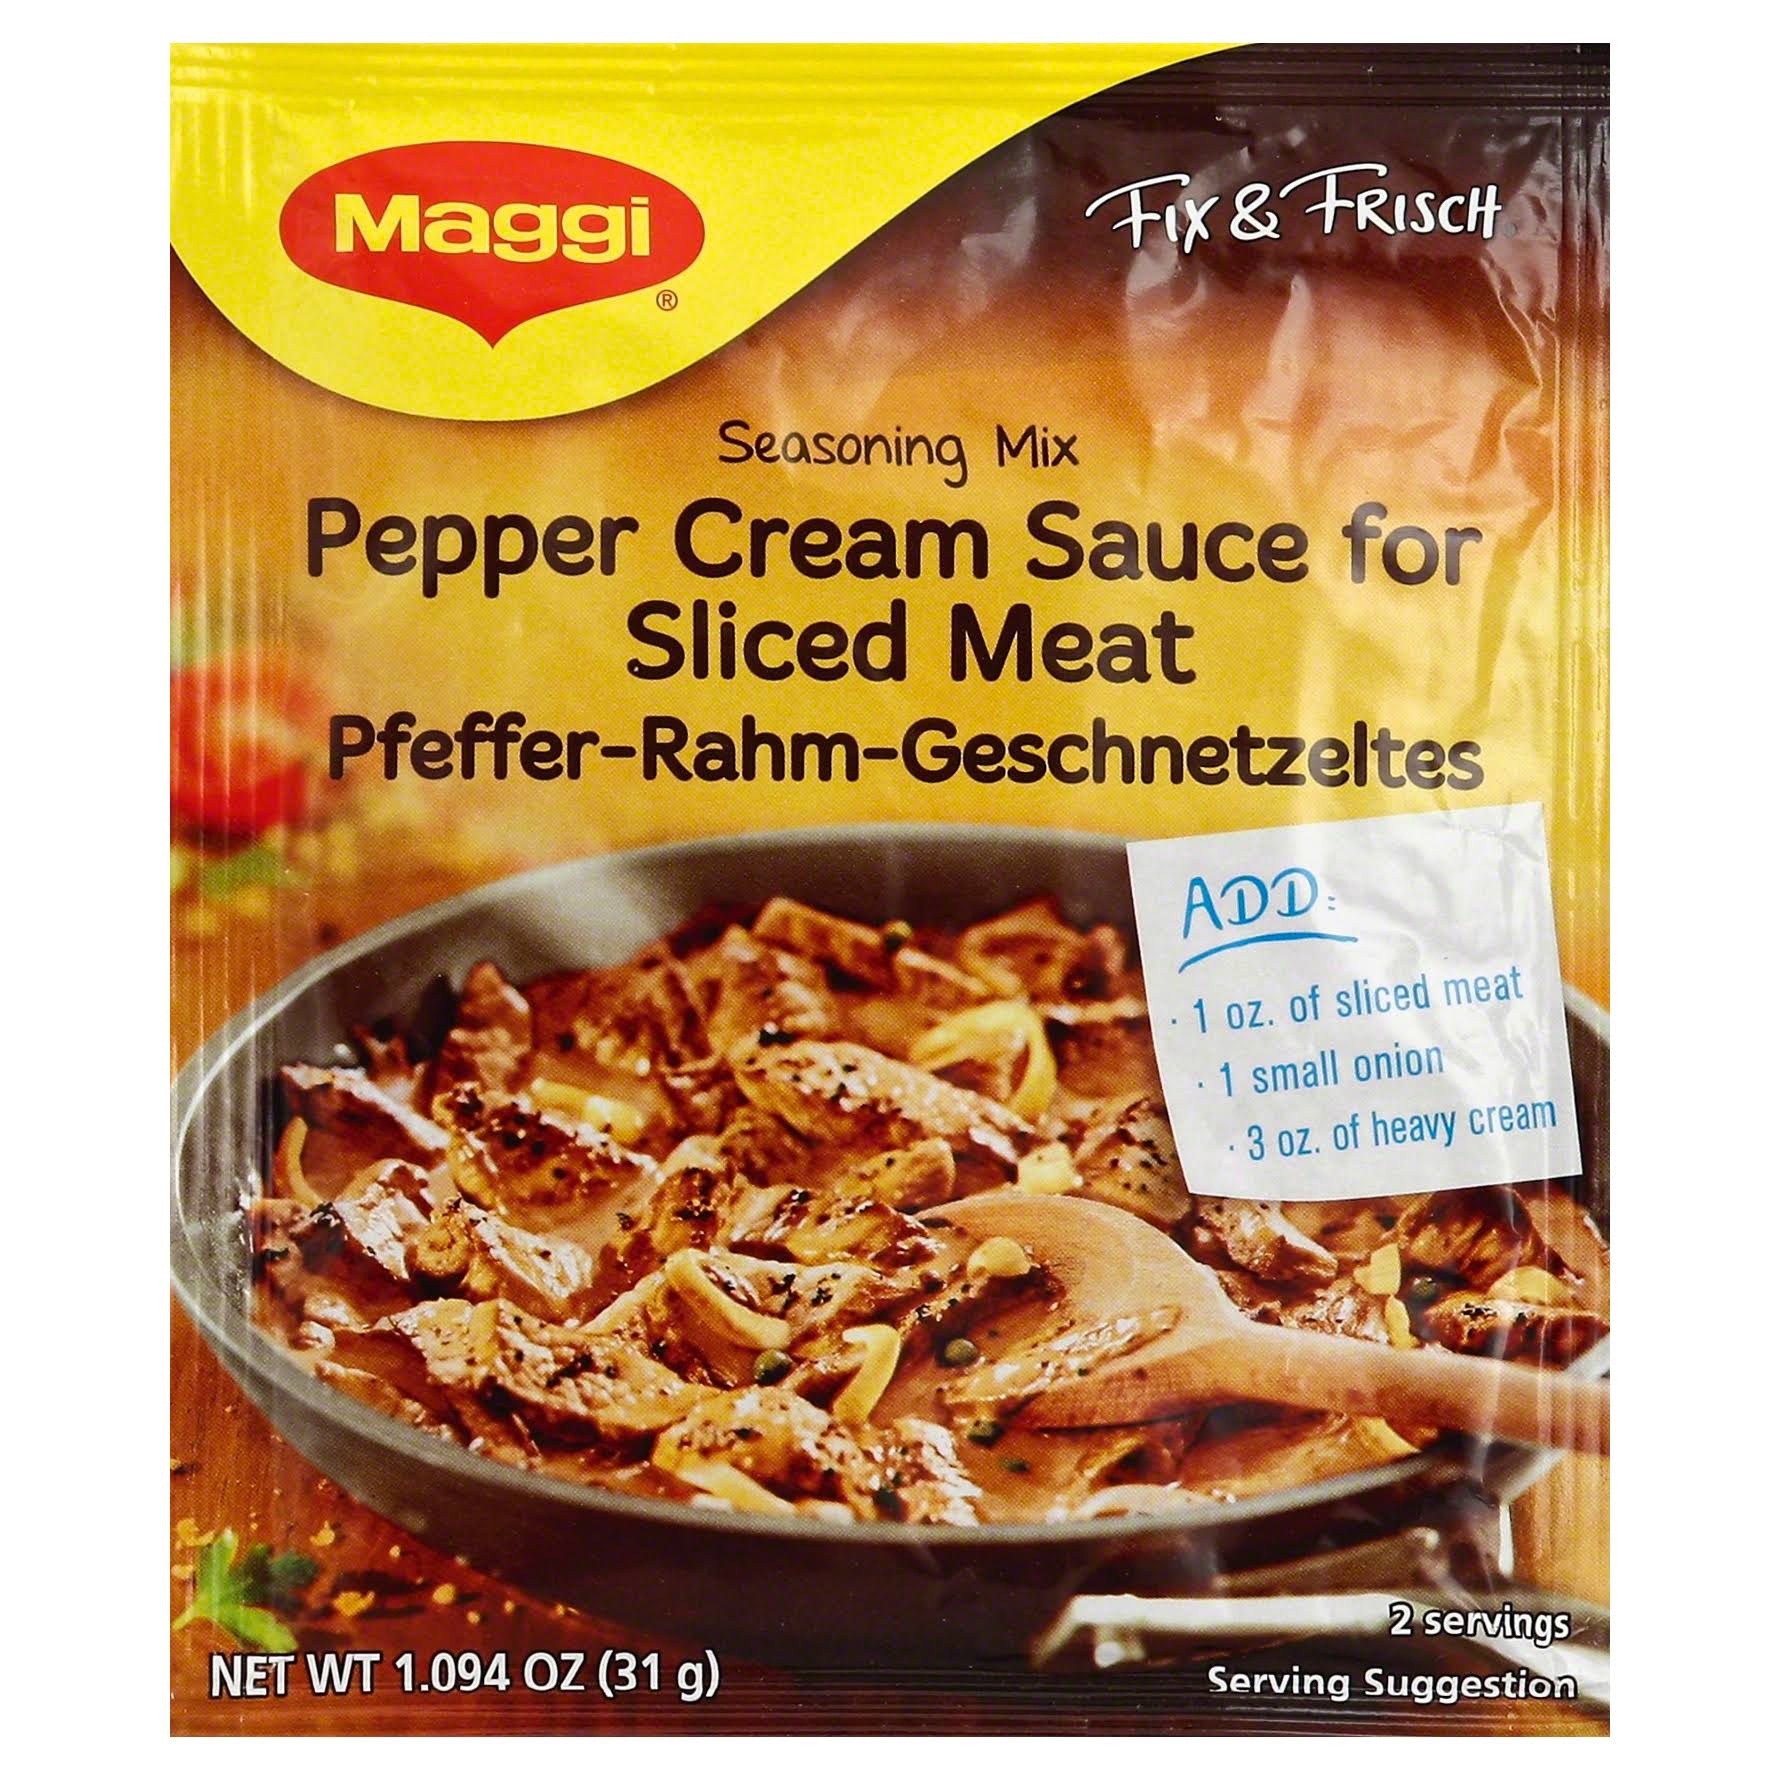 Maggi Fix & Frisch Seasoning Mix, Pepper Cream Sauce for Sliced Meat - 1.094 oz